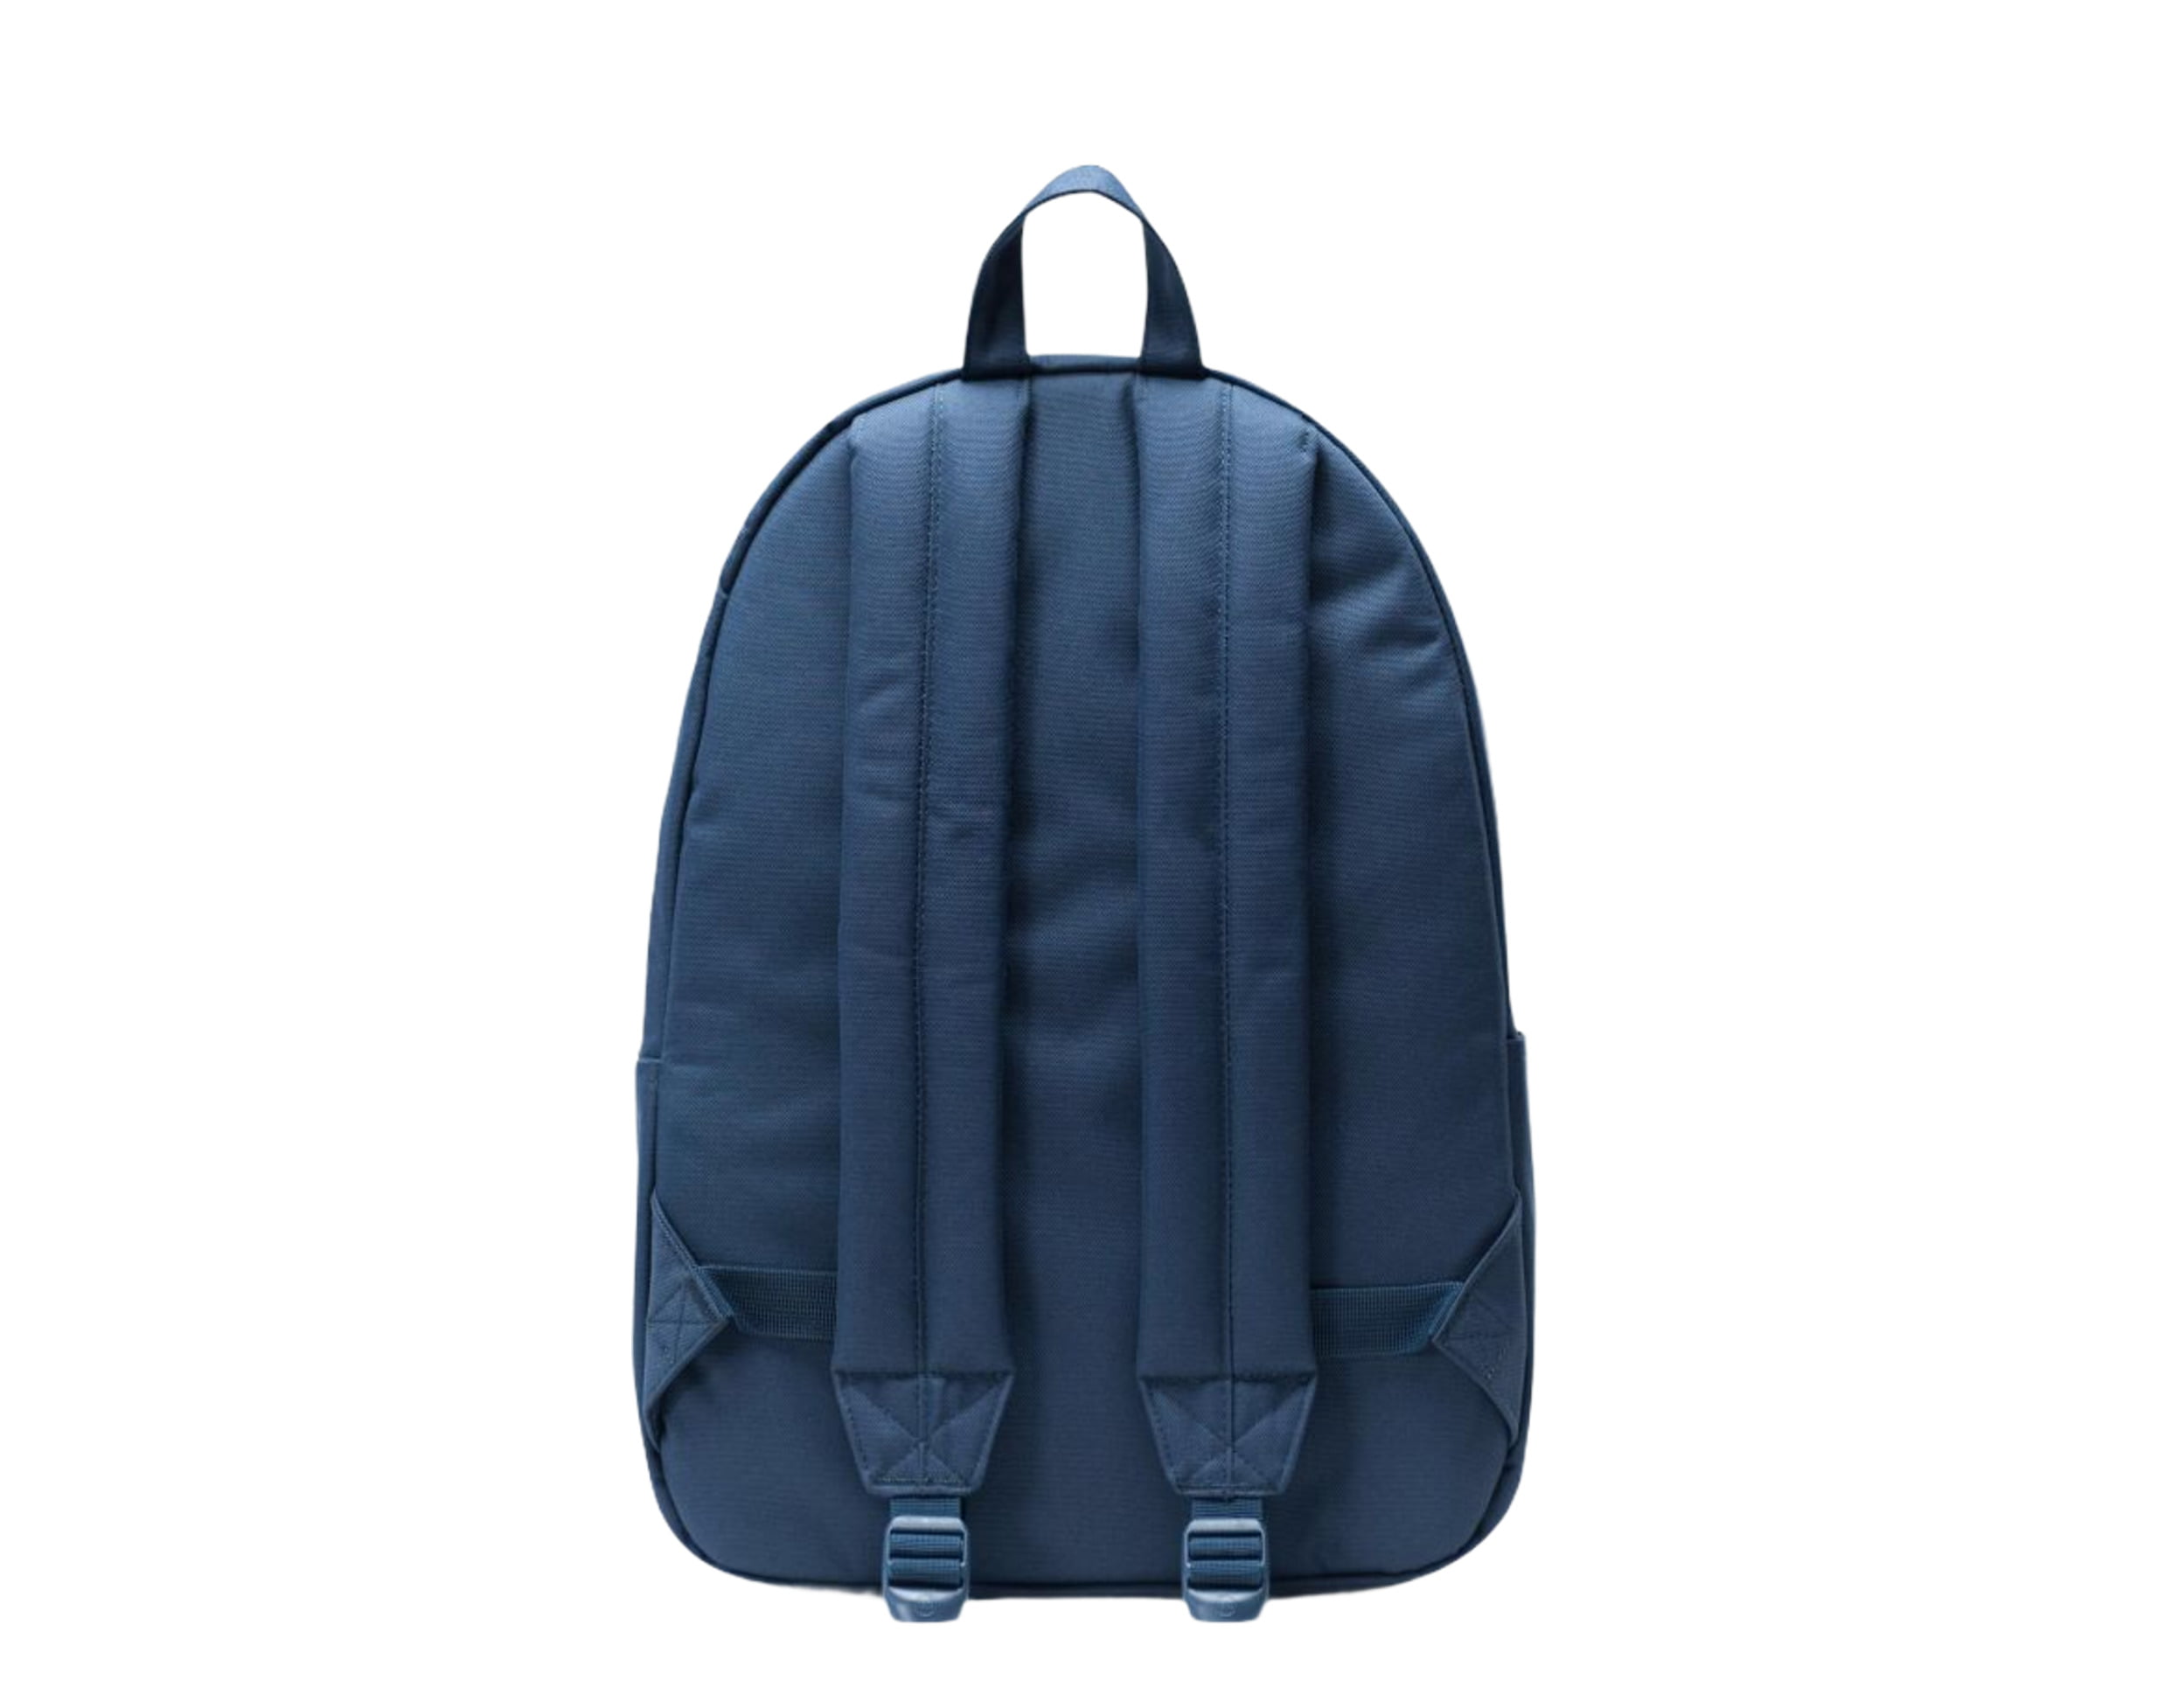 Herschel Classic Xl Backpack - Daypack, Comprar online